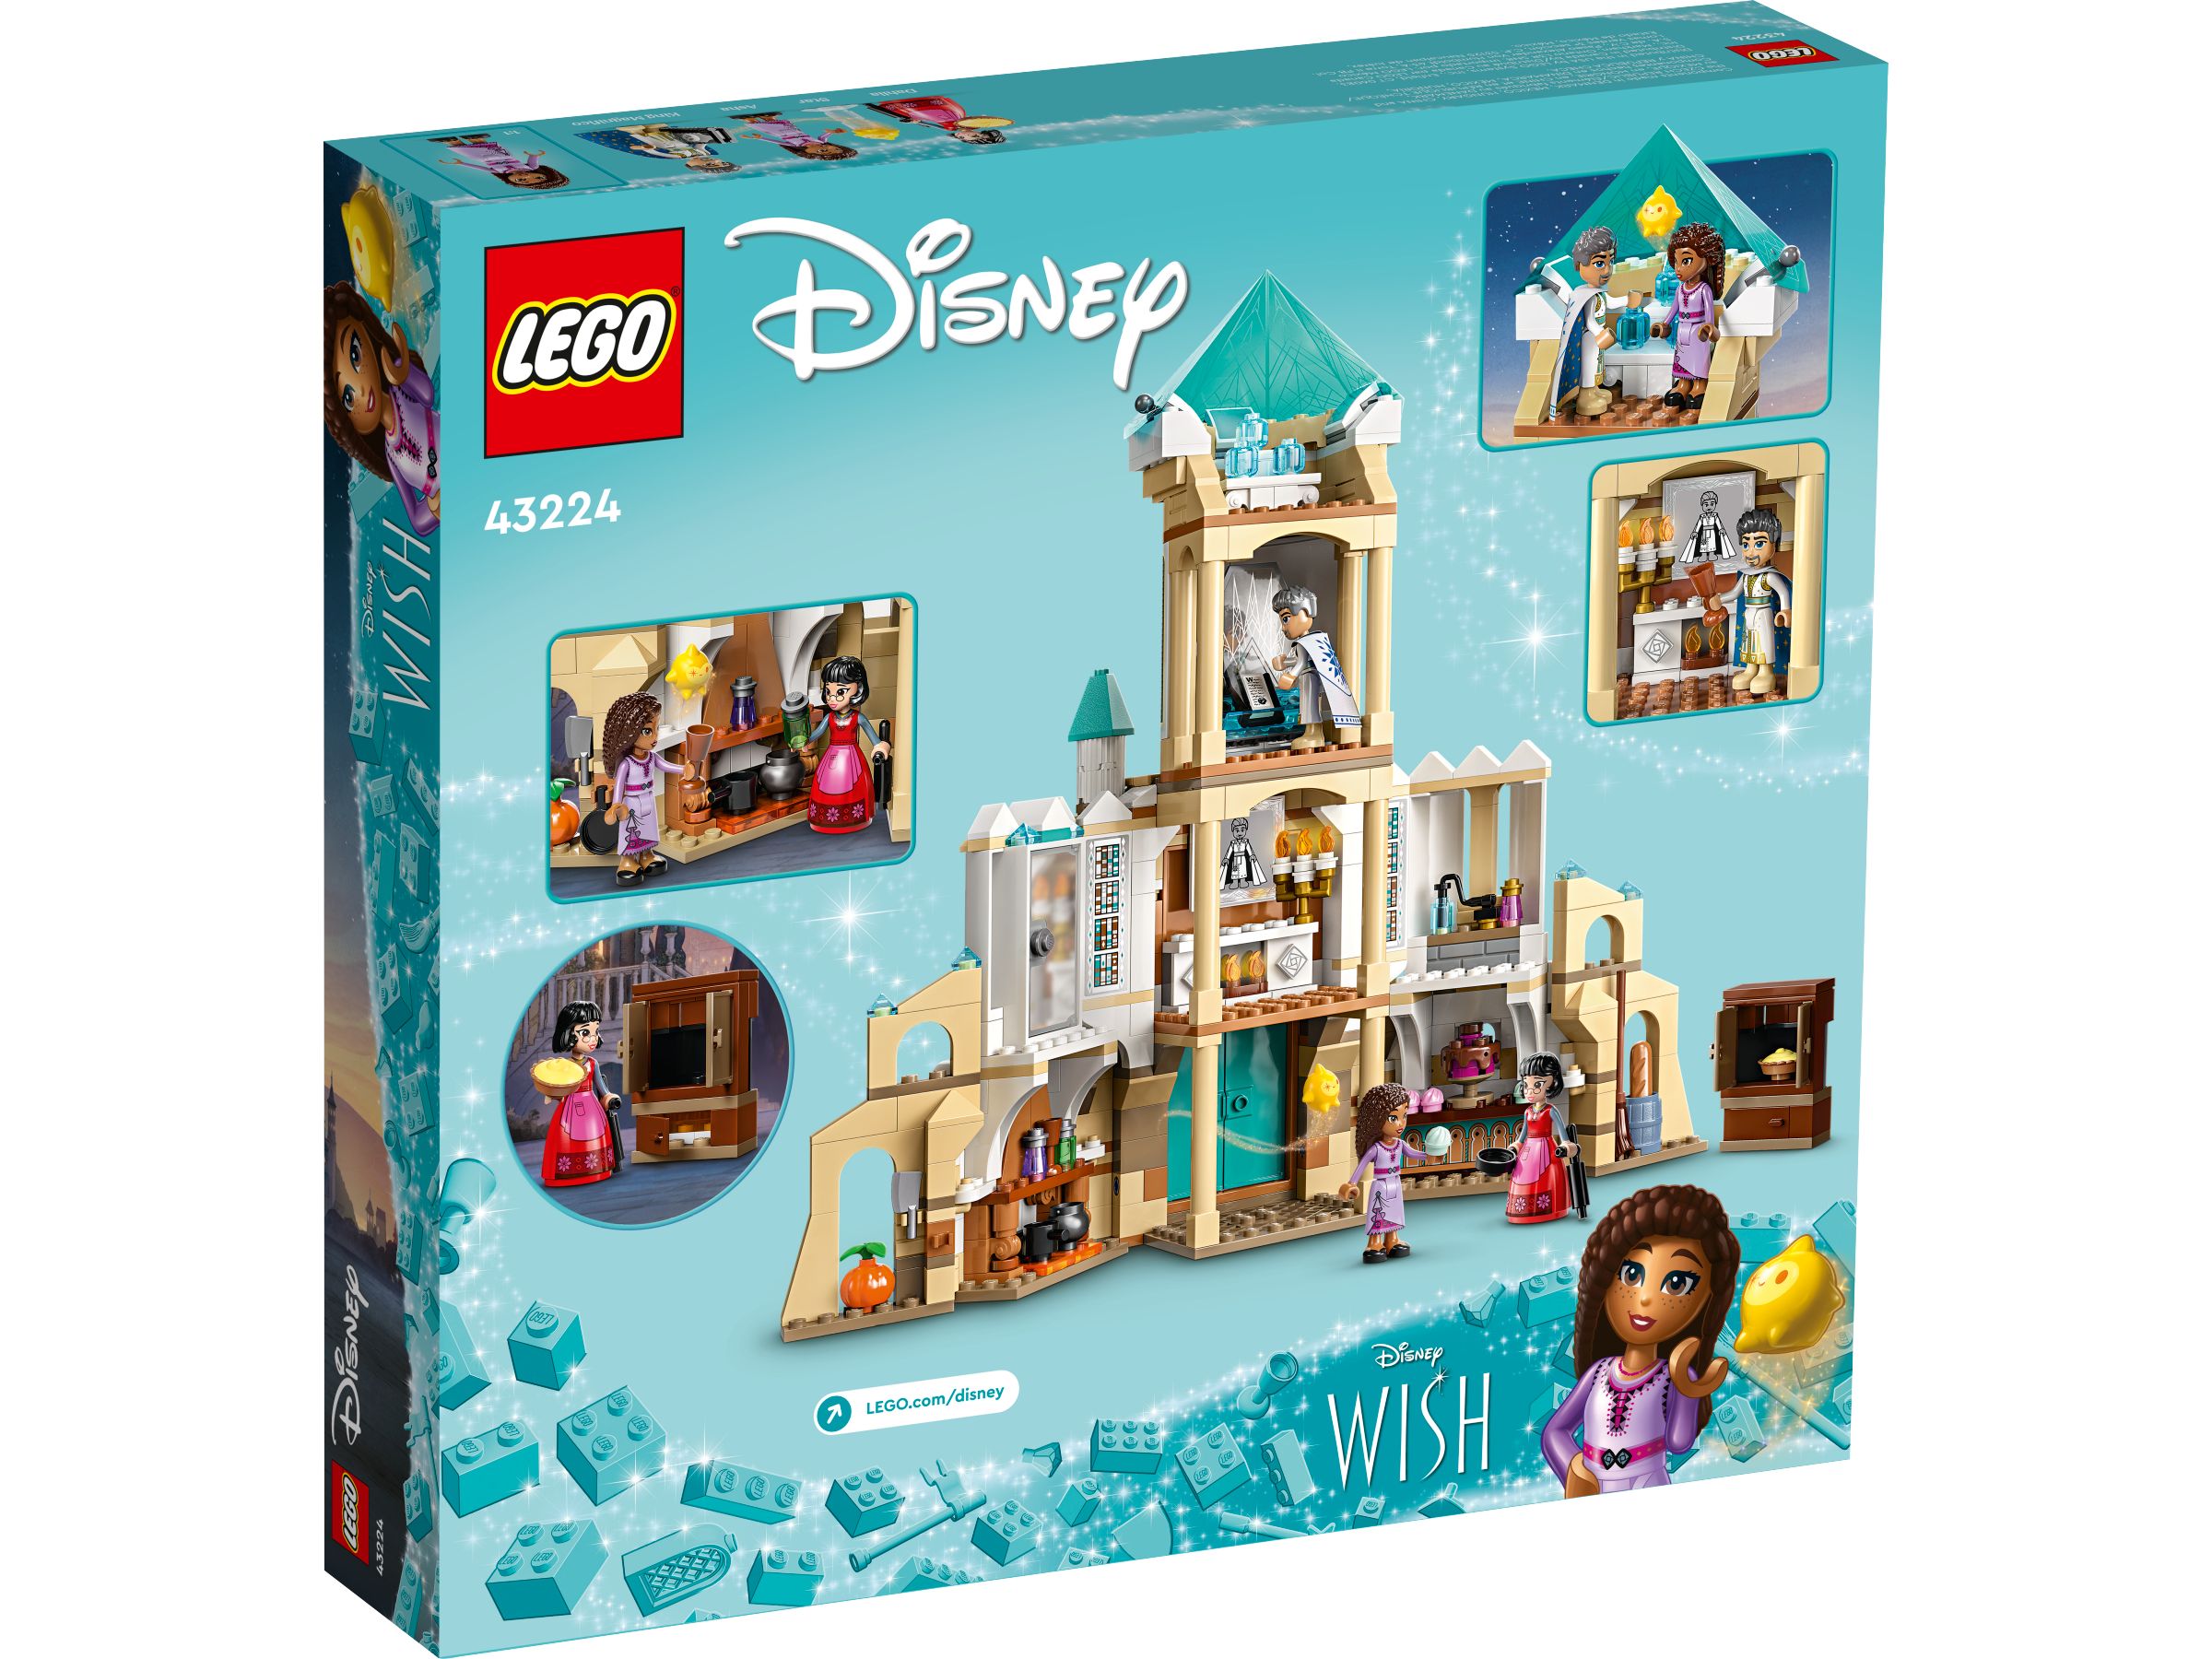 LEGO Disney 43224 König Magnificos Schloss LEGO_43224_alt8.jpg